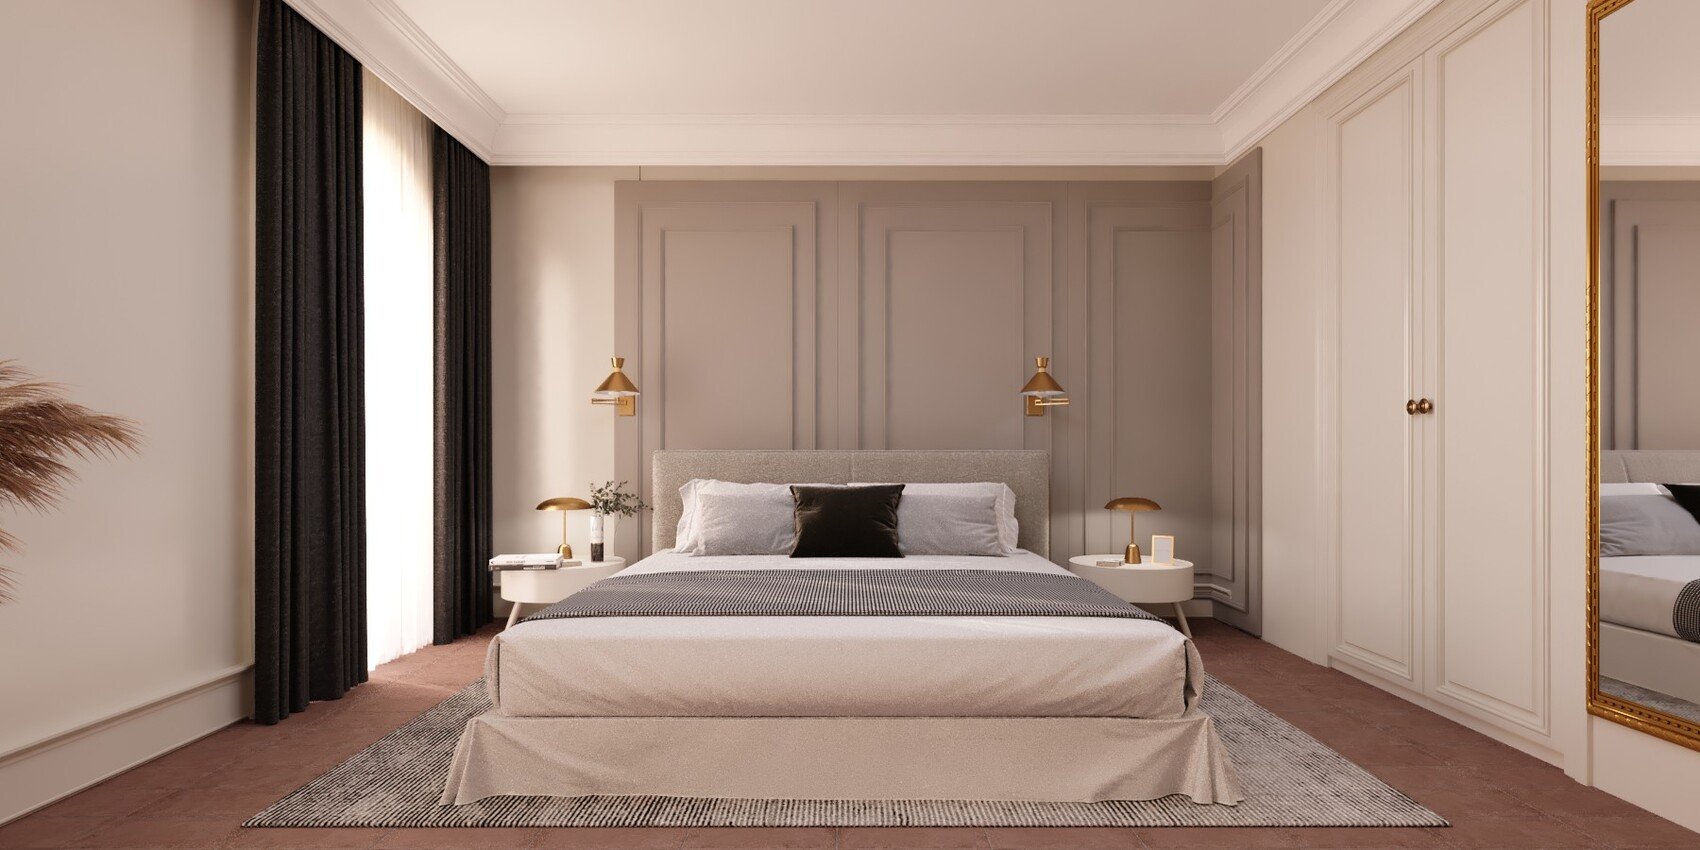 design boutique hotel Domaine de Rochebois 5 stars Périgord Vitrac Dordogne room suite